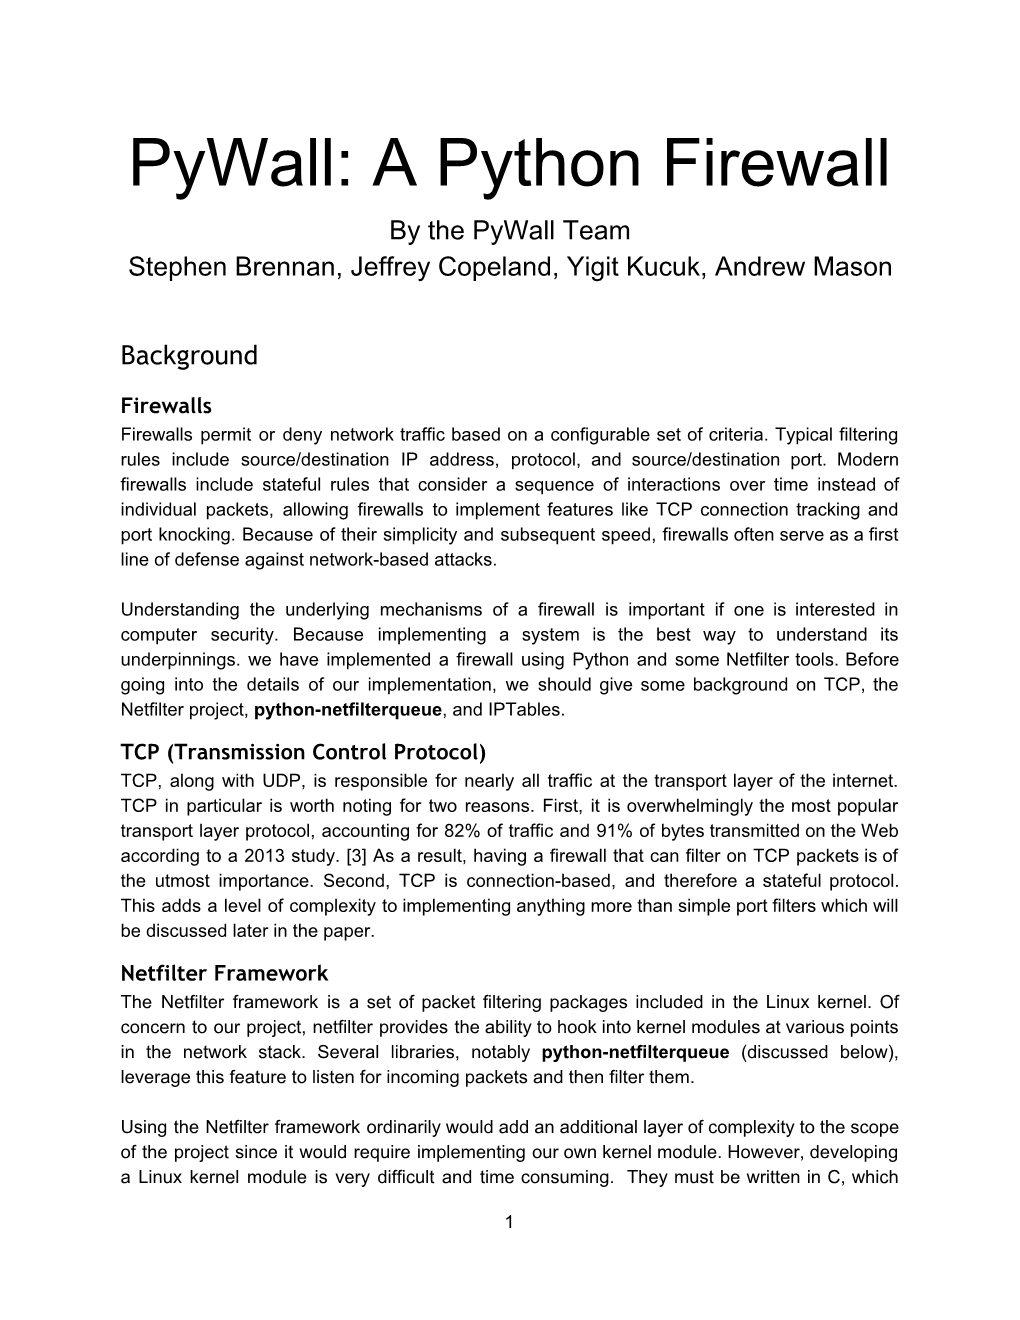 Pywall: a Python Firewall by the Pywall Team Stephen Brennan, Jeffrey Copeland, Yigit Kucuk, Andrew Mason